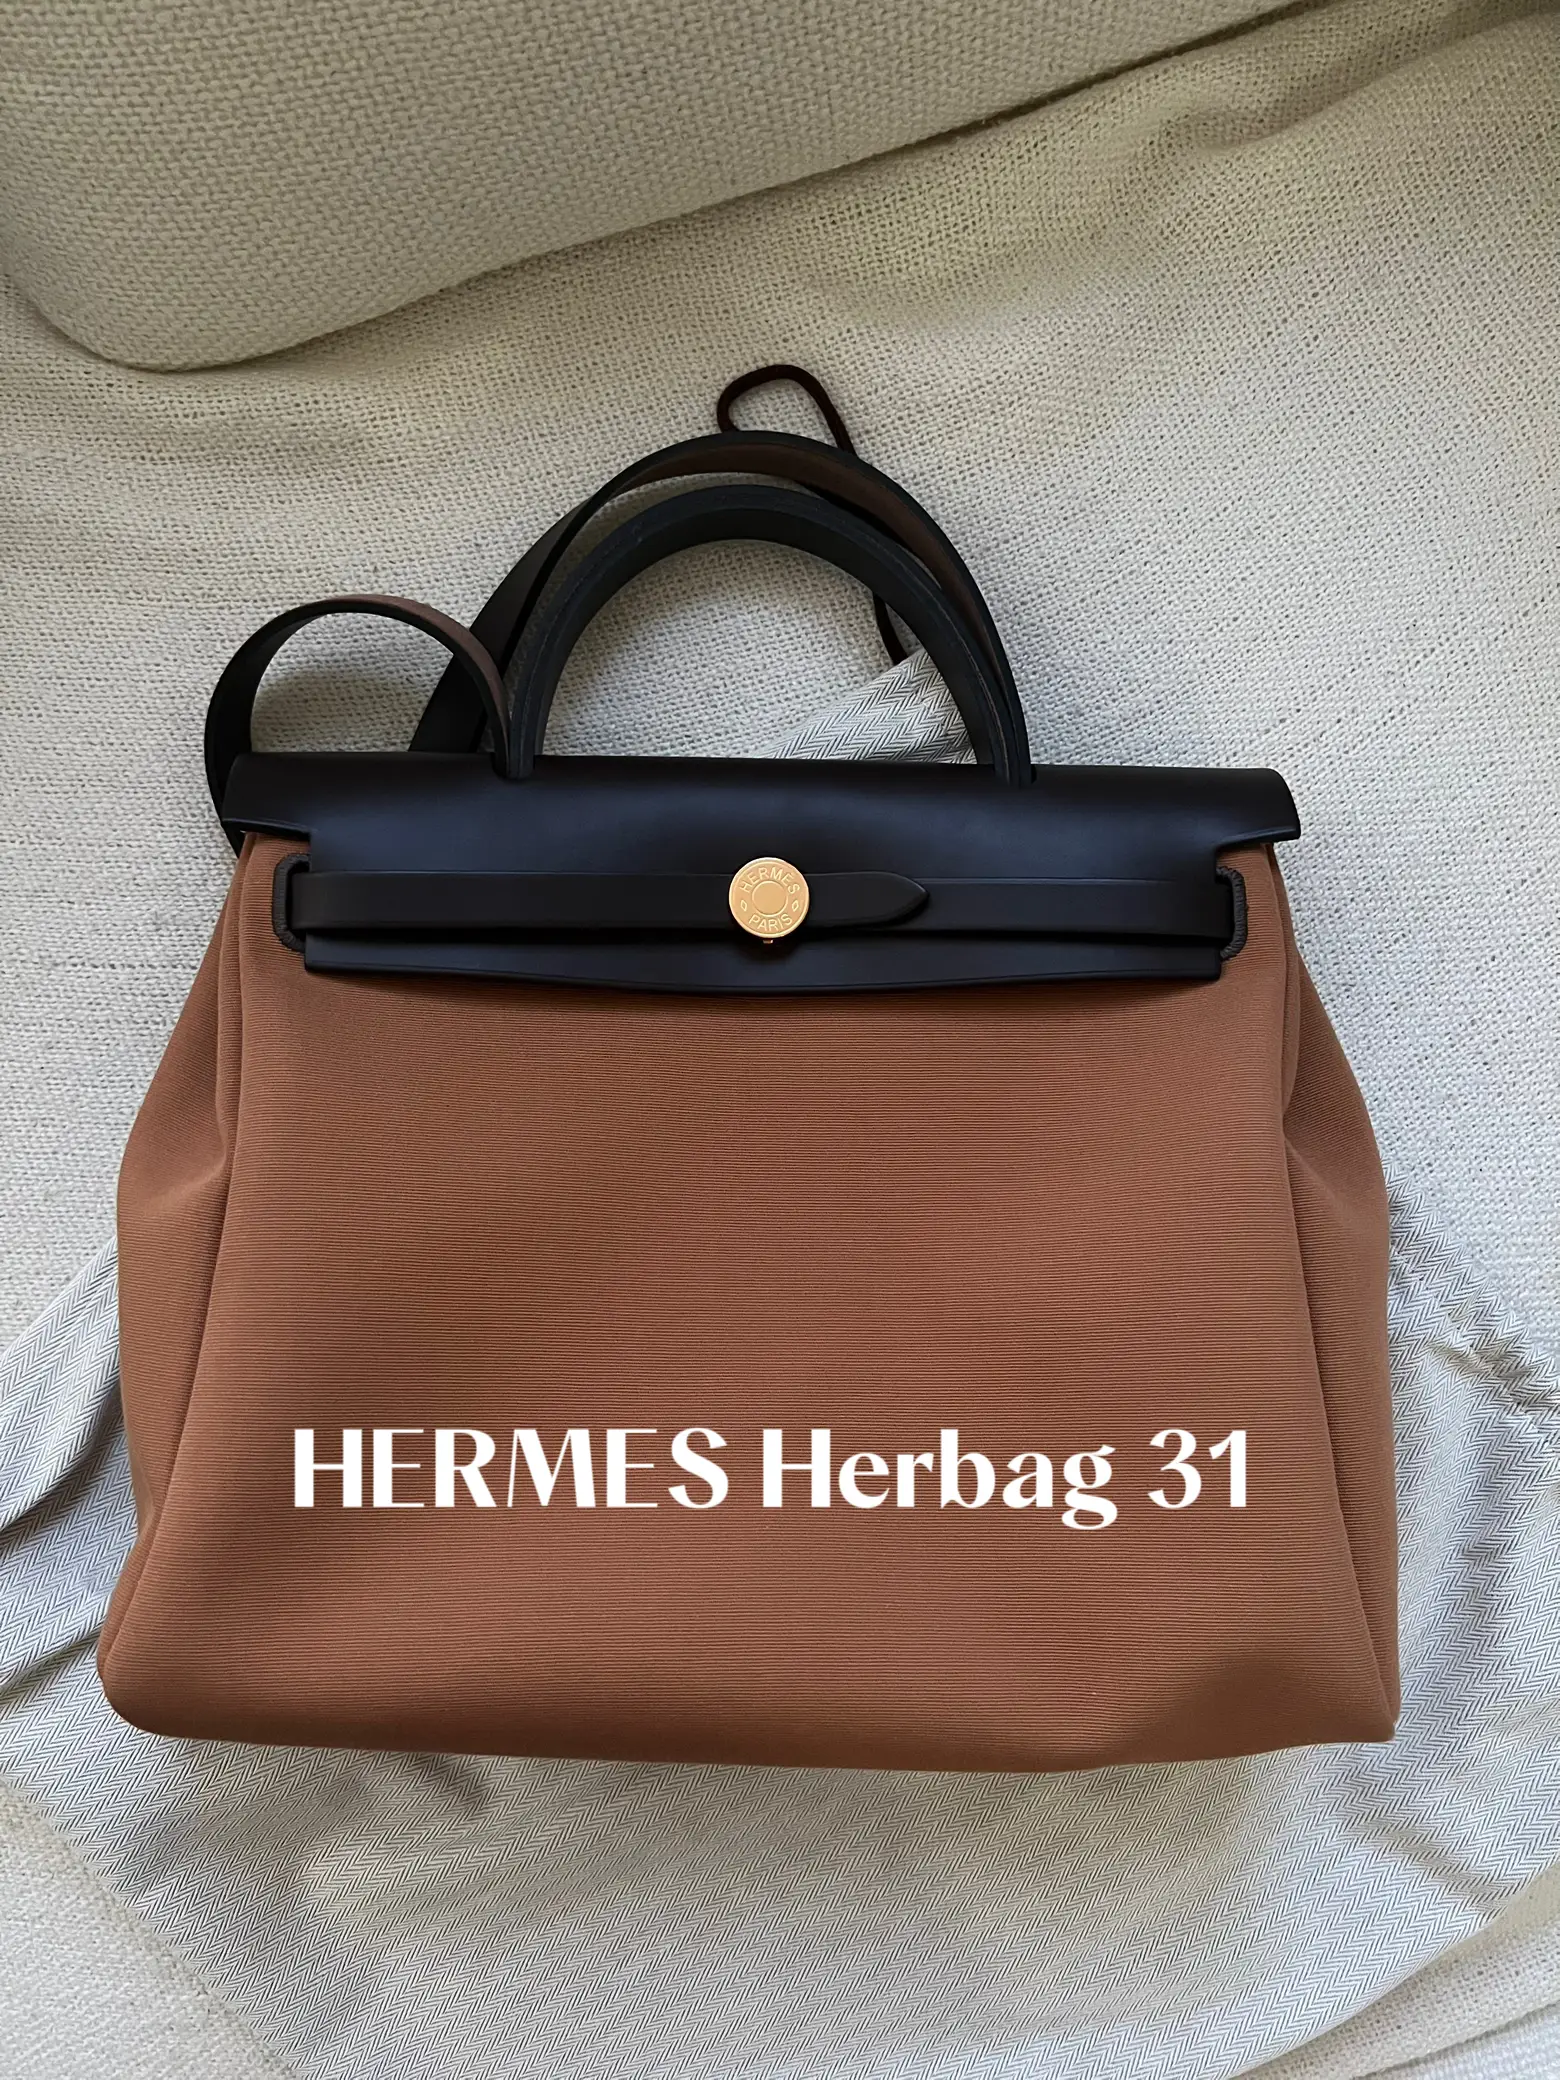 ewa lagan - Women - Hermès - Herbag Archives